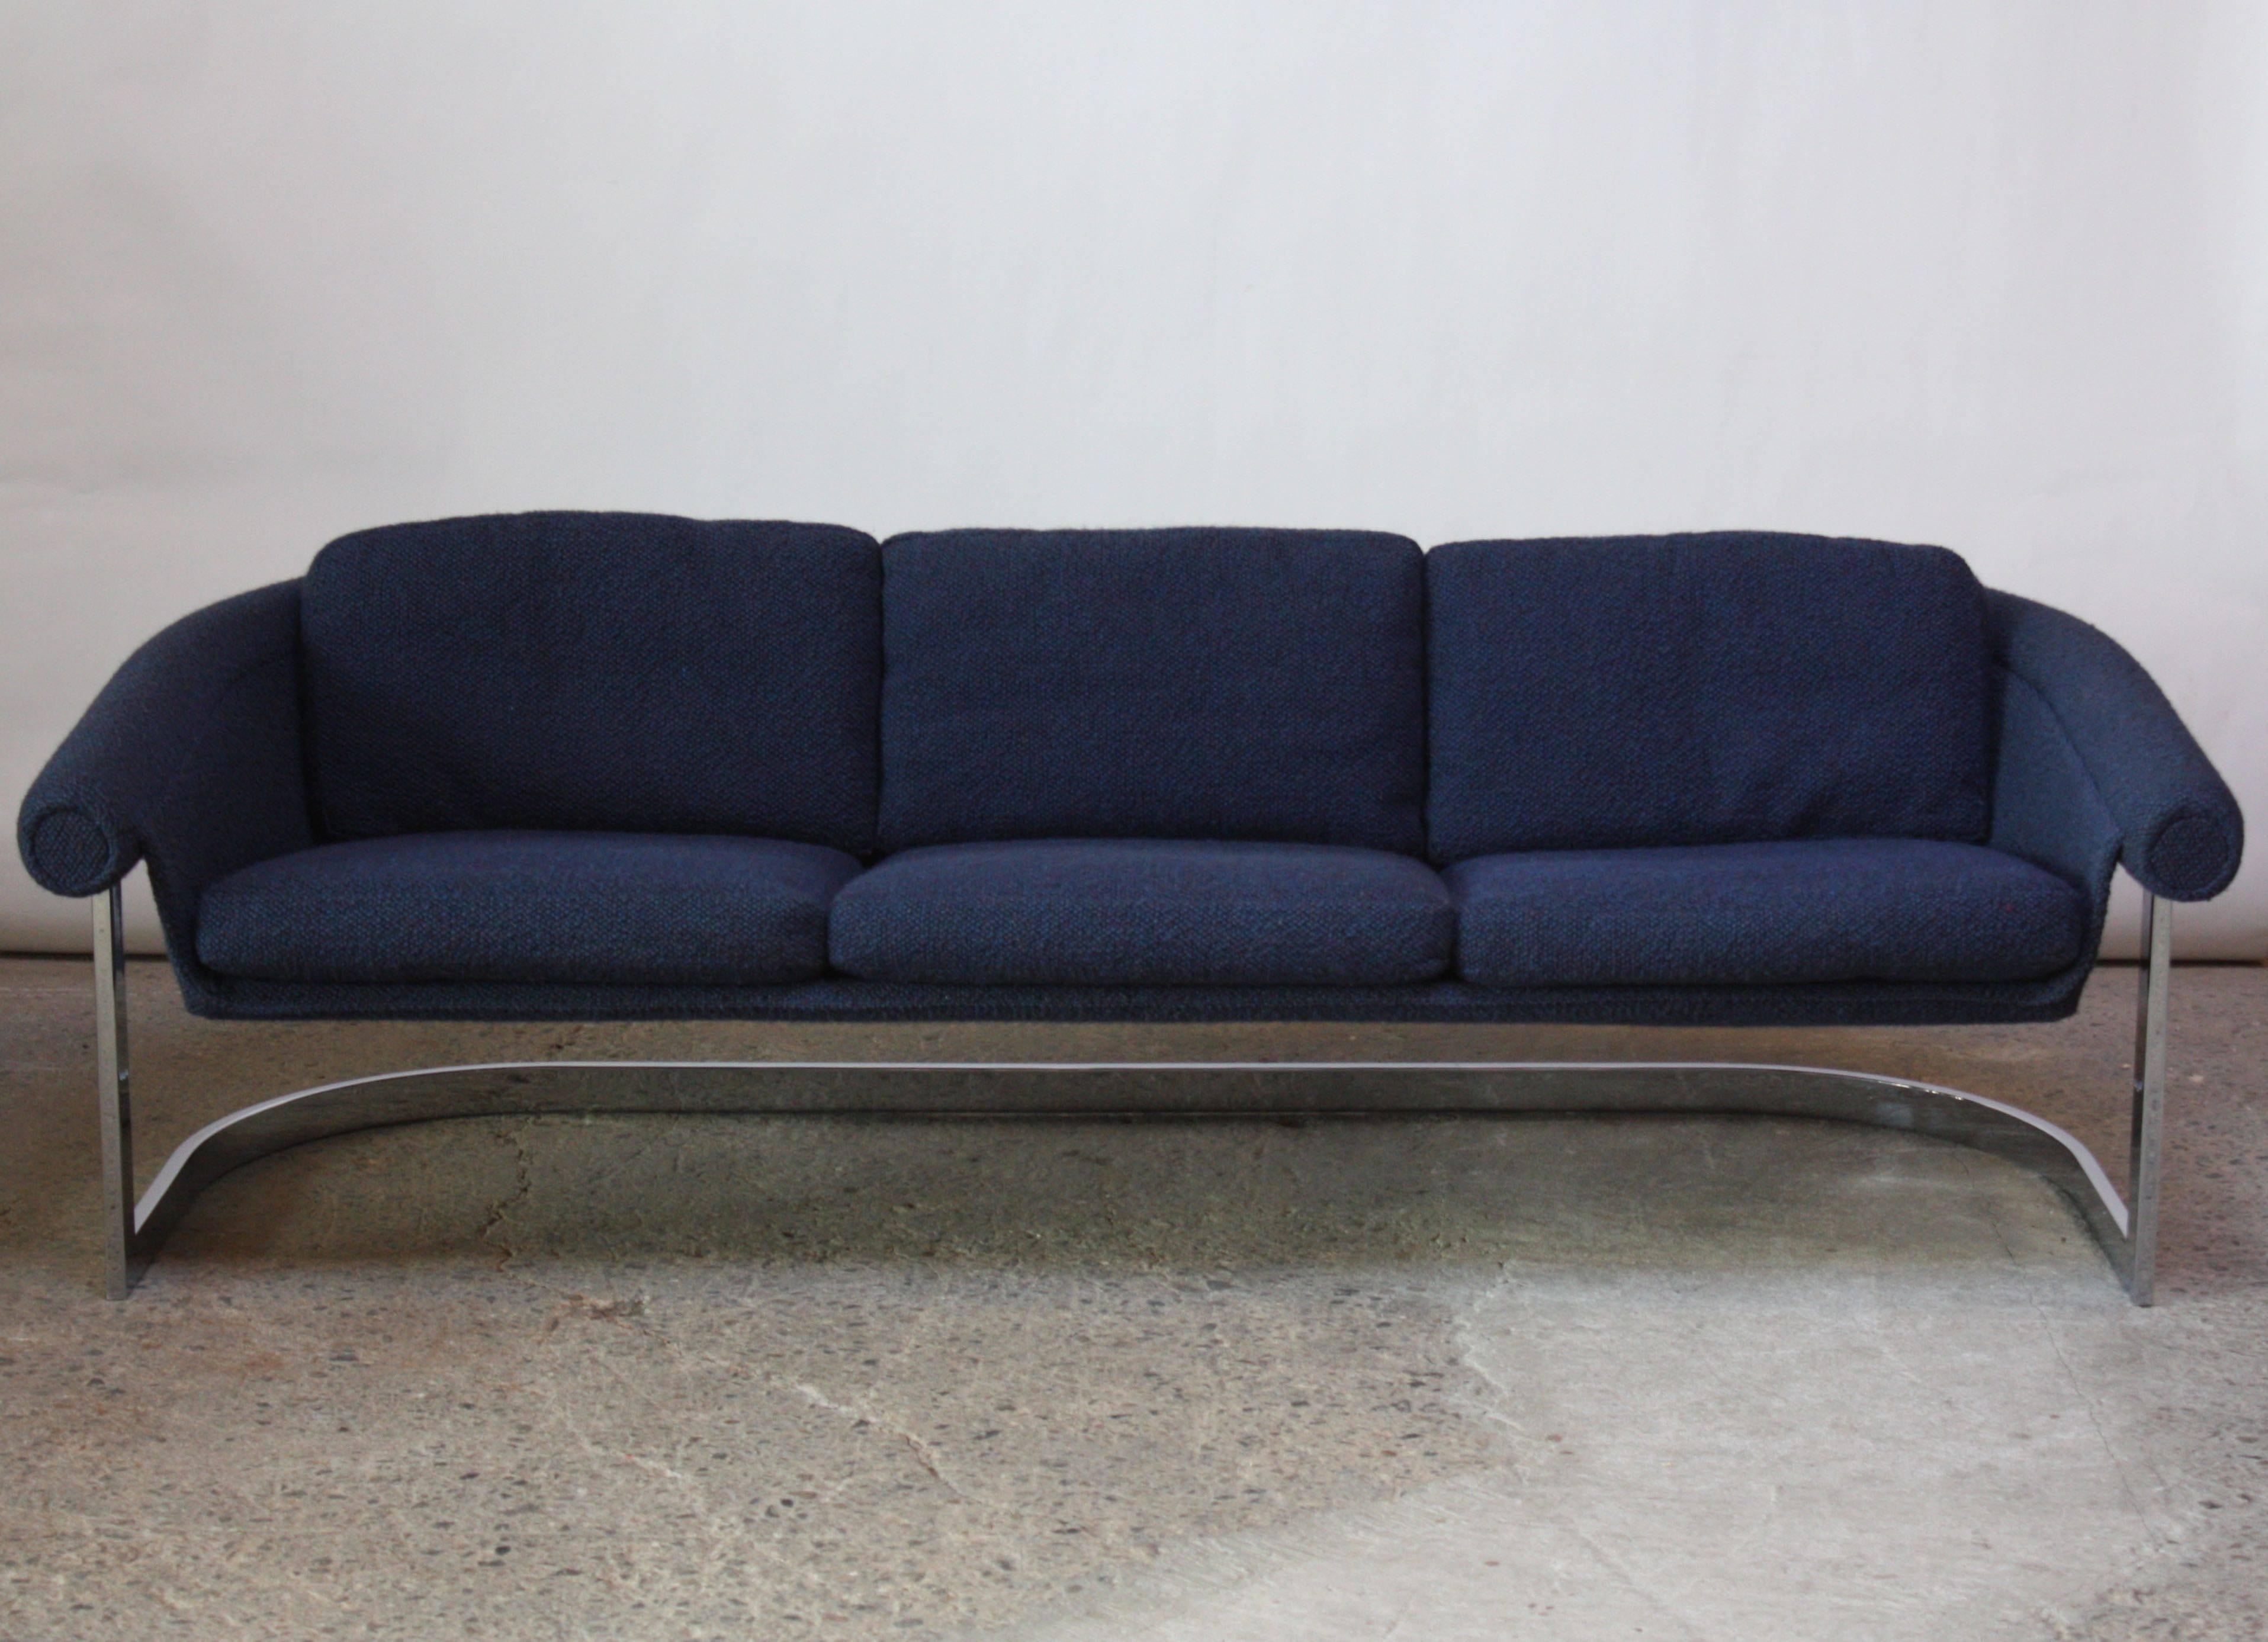 Plated Milo Baughman Style Cantilevered Chrome Sofa